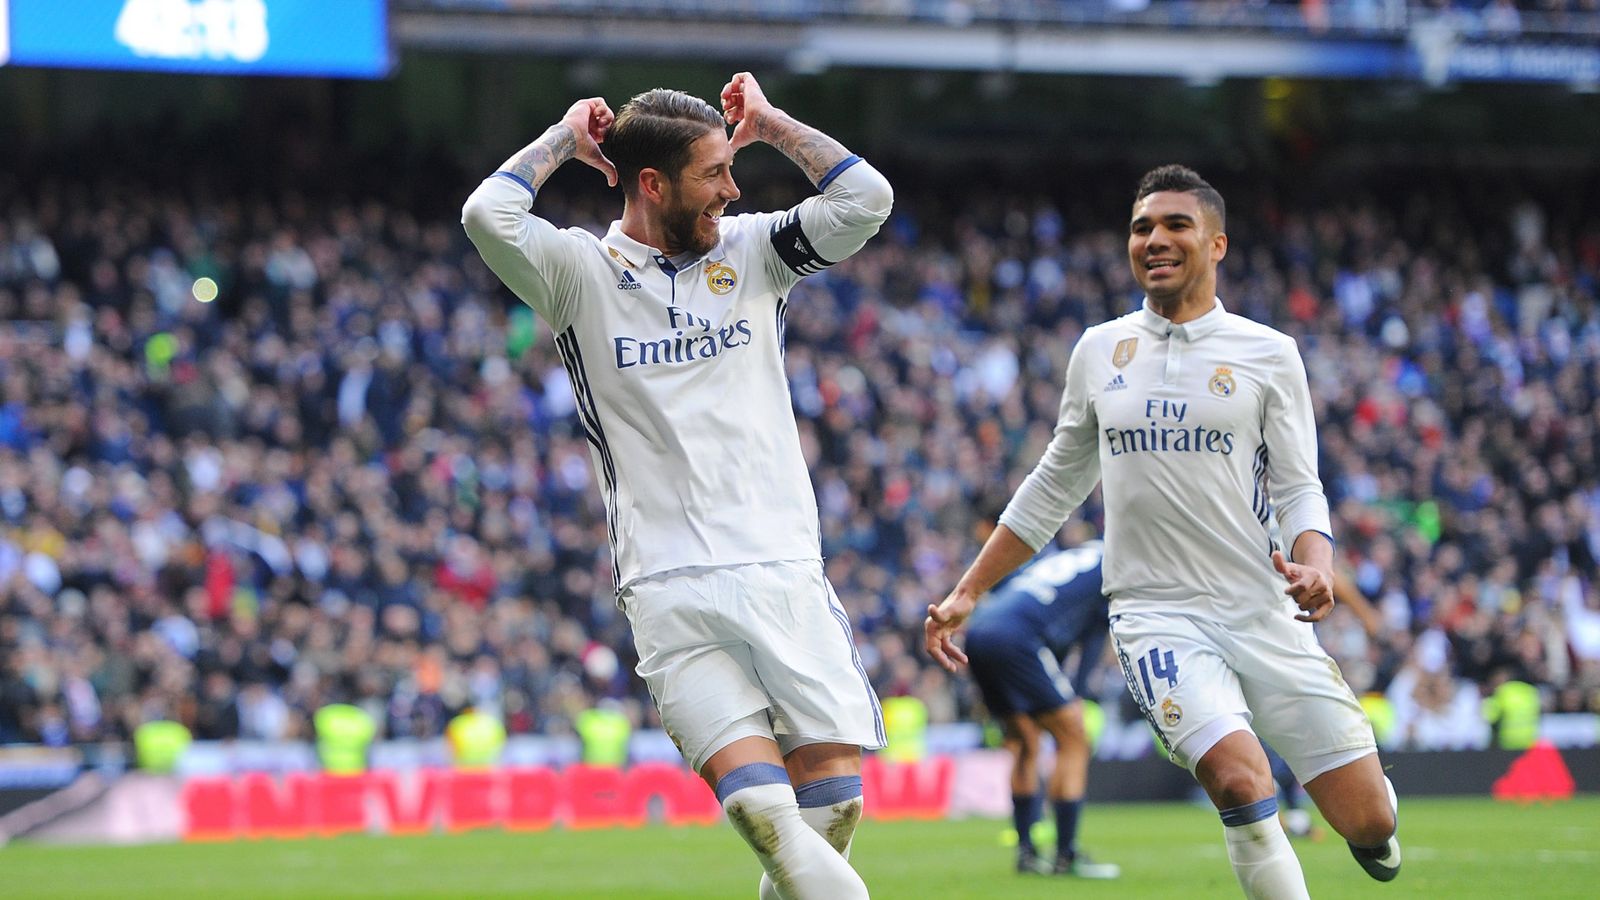 WATCH: Real Madrid's Sergio Ramos scores 50th La Liga goal | Football News | Sky Sports